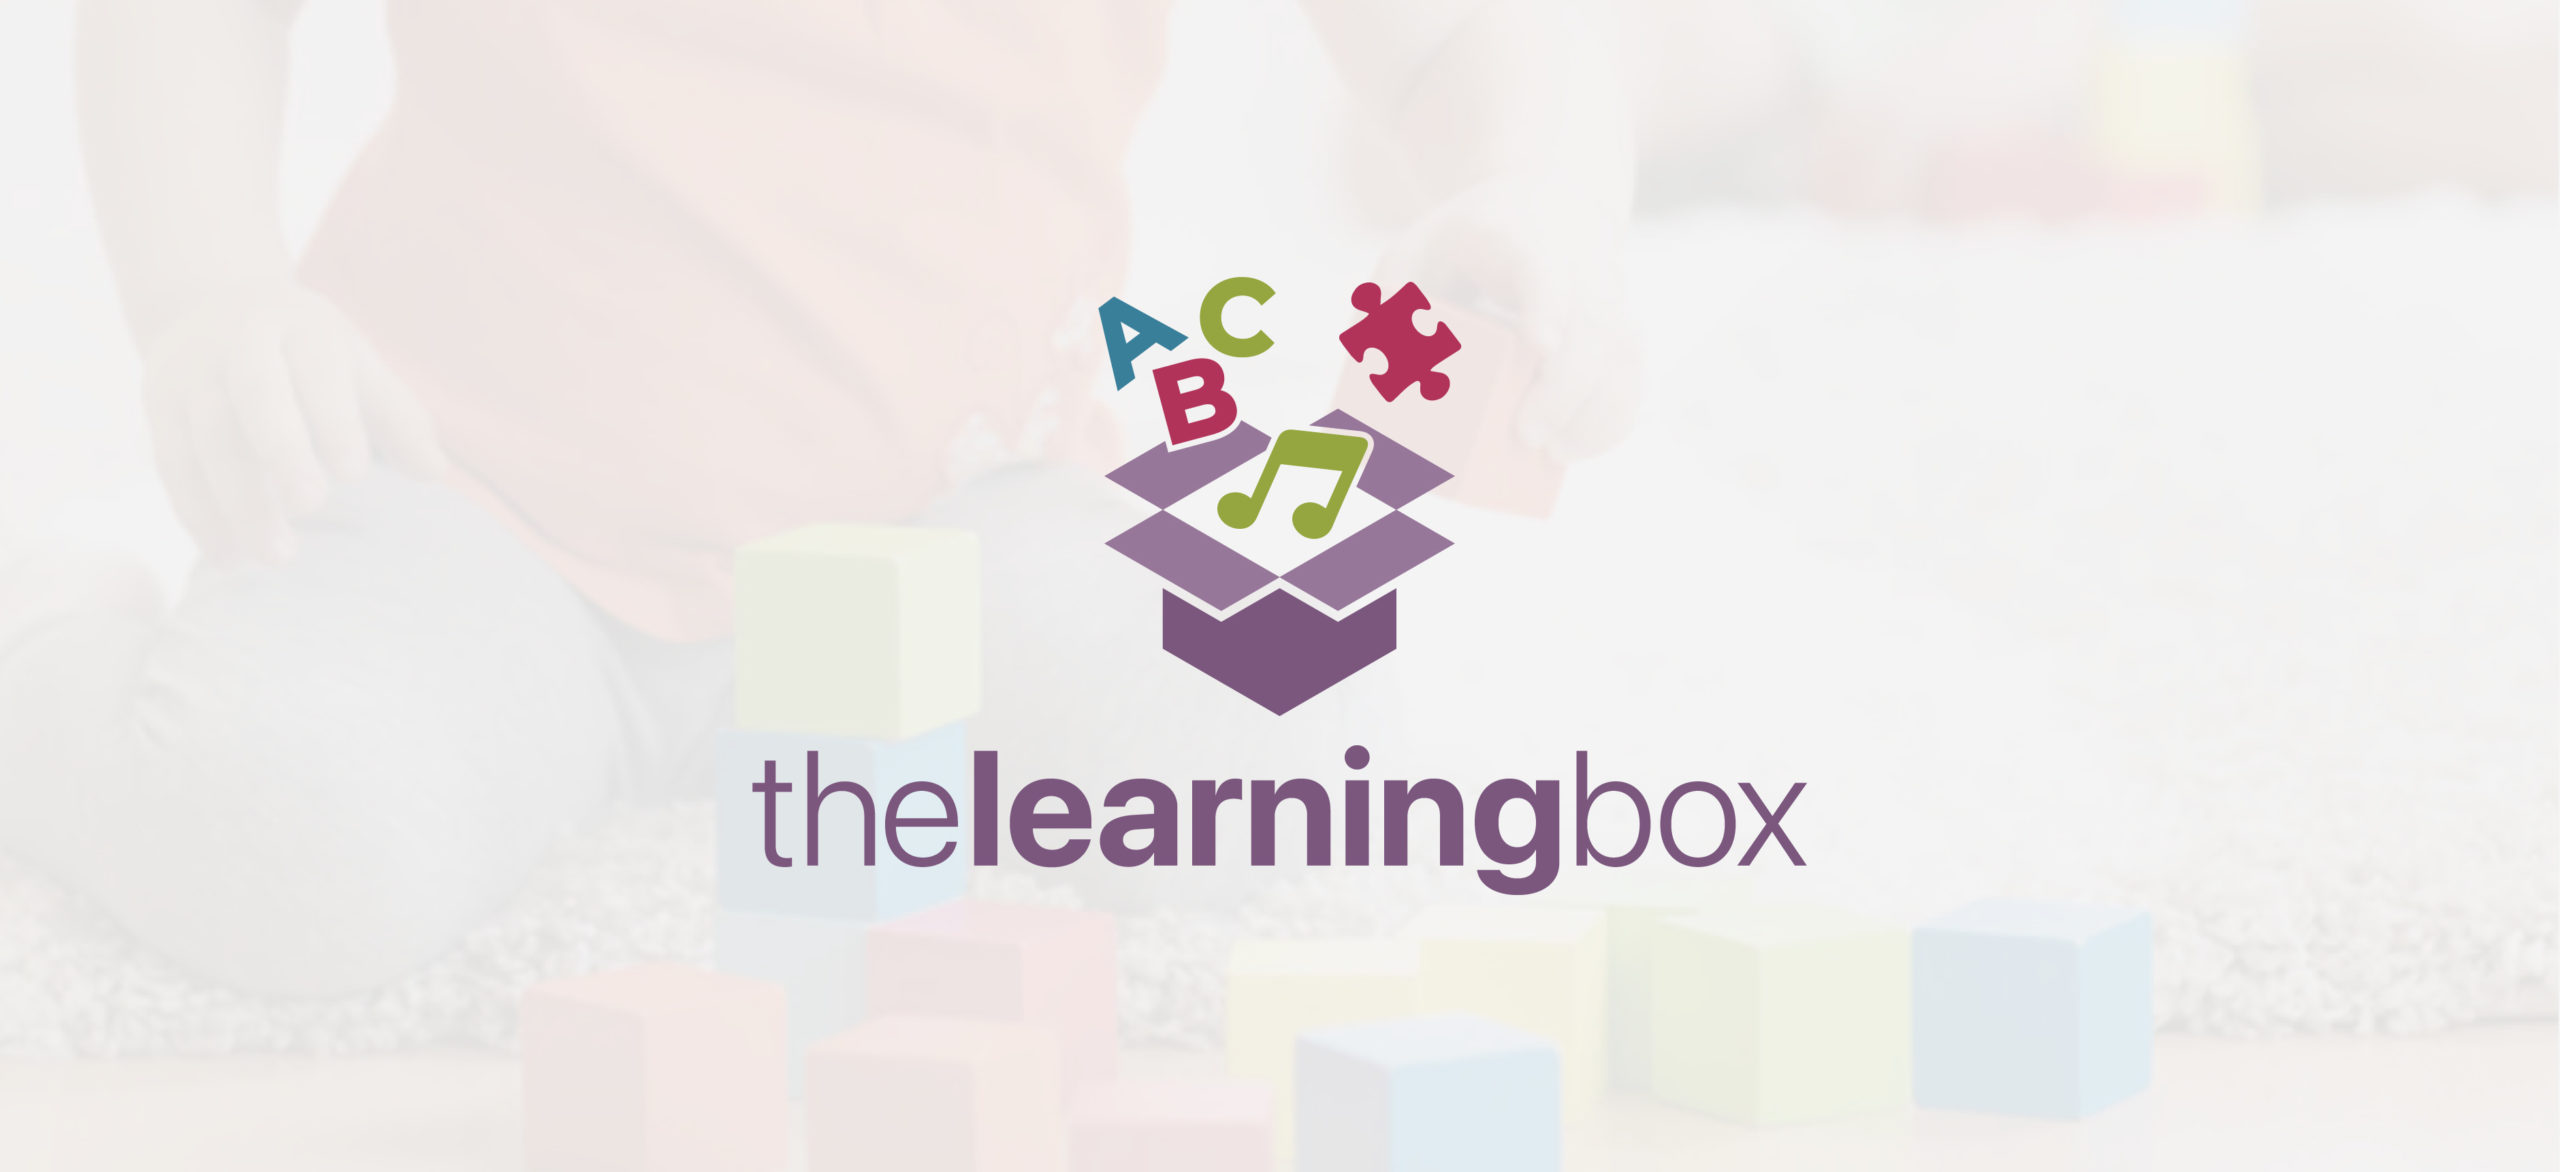 The Learning Box Full Logo | Brand Identity Design